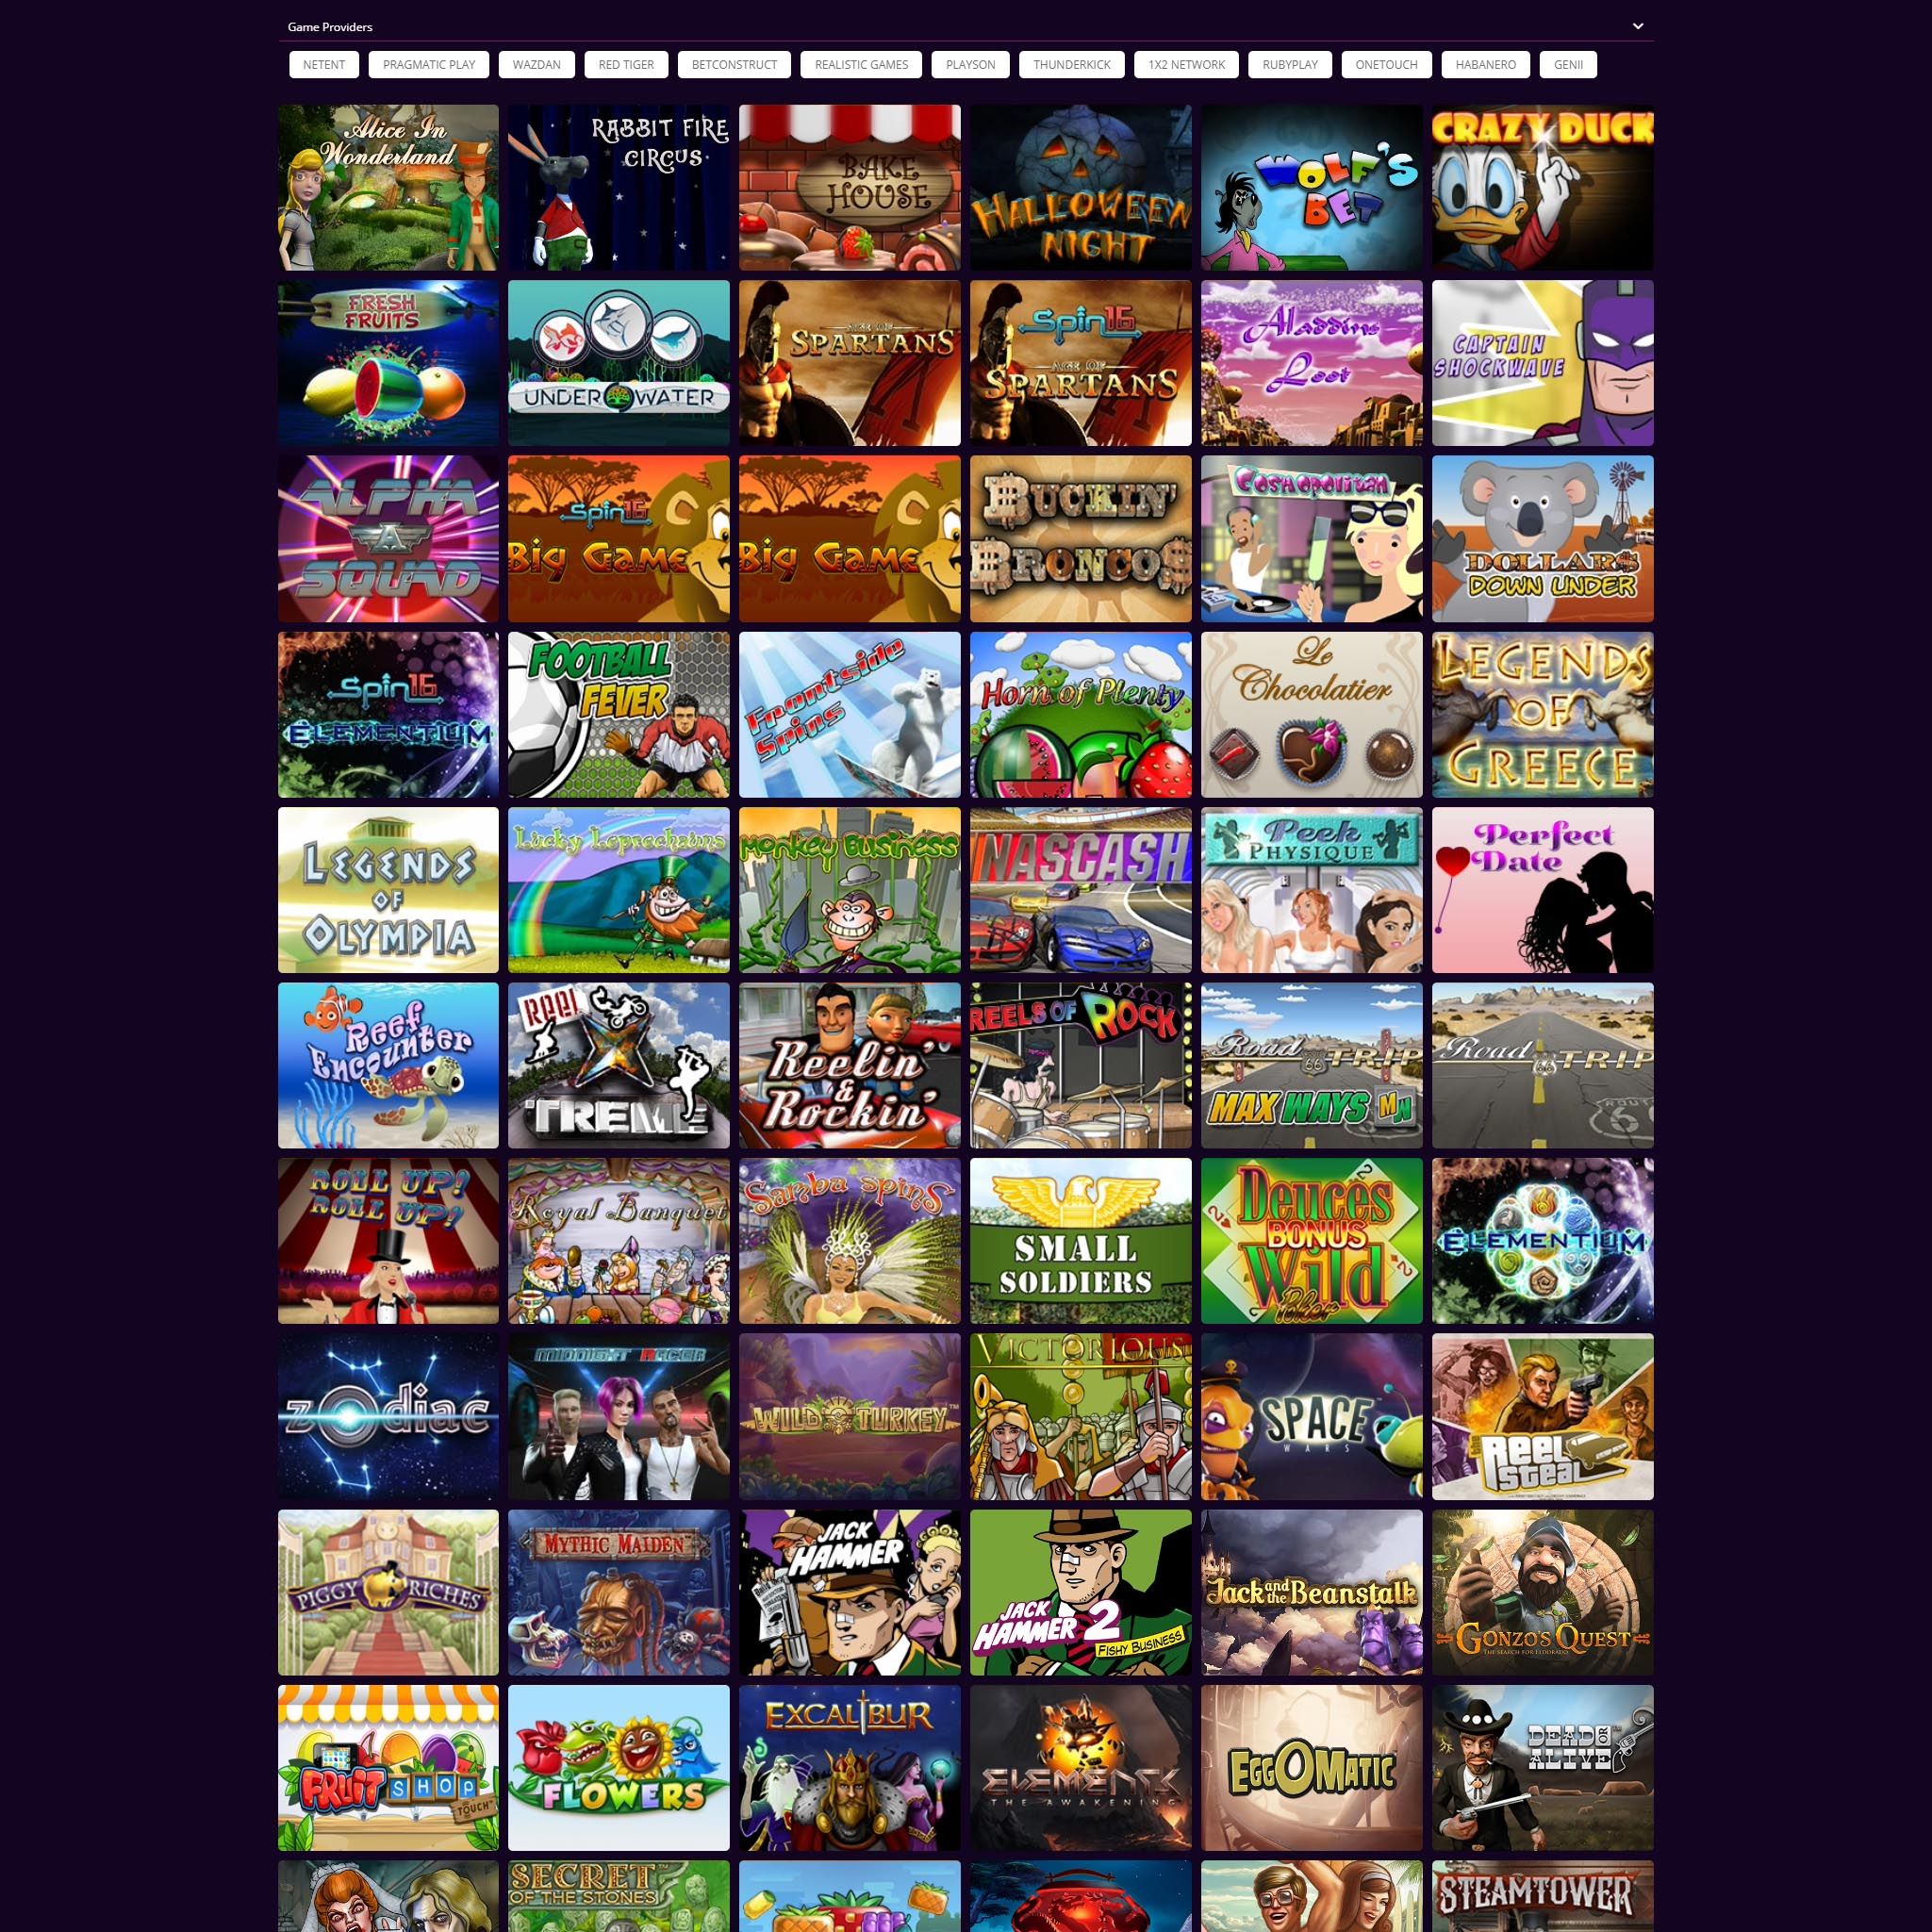 TwiceDice Casino full games catalogue